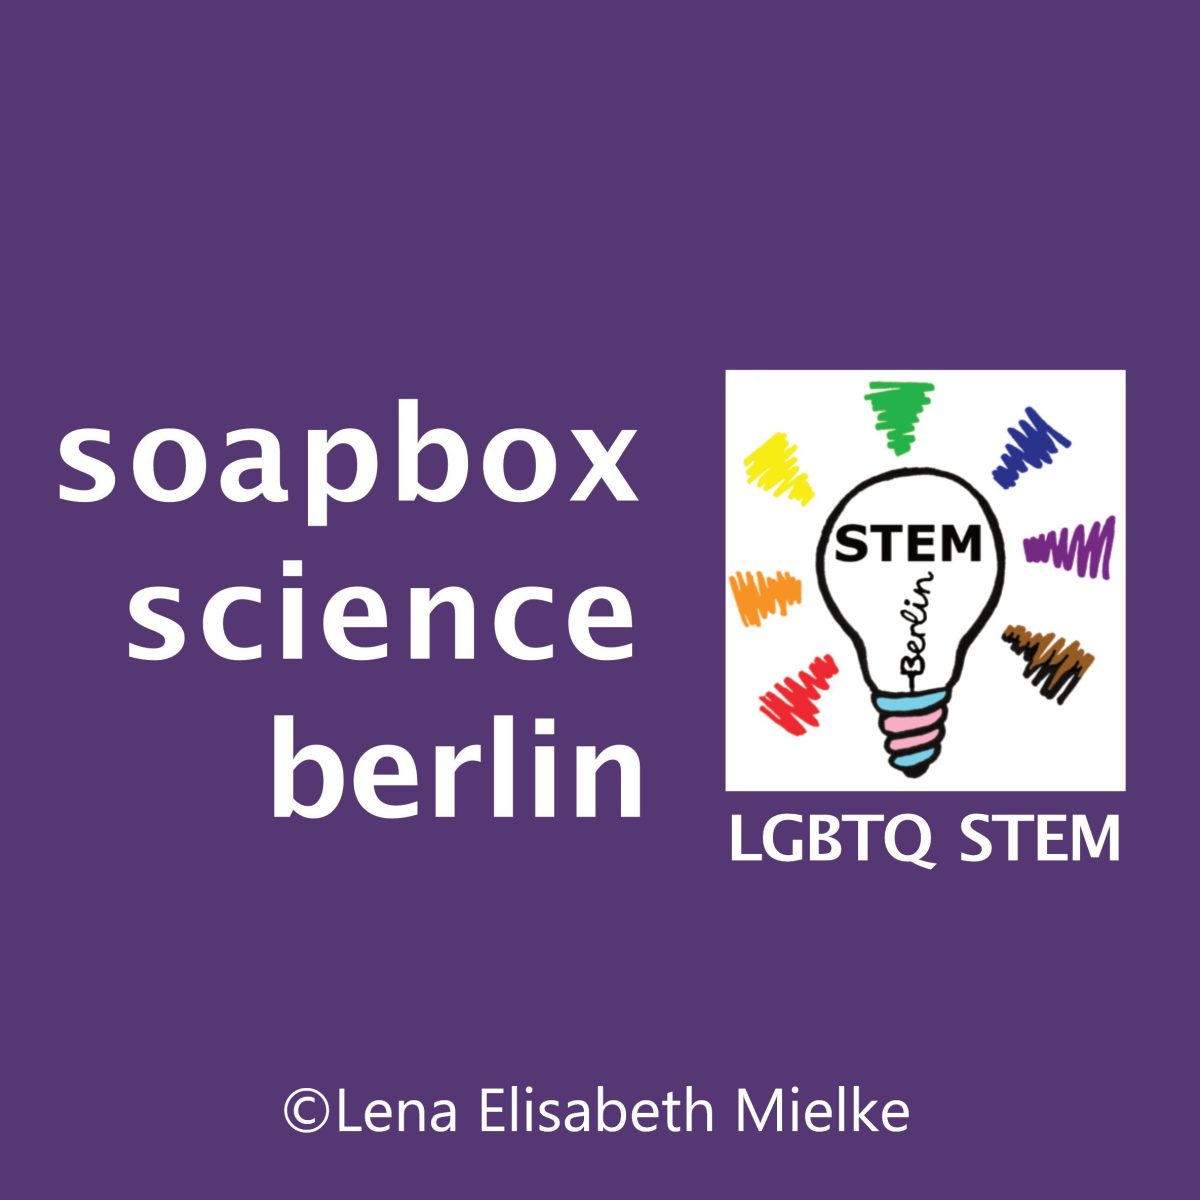 Soapbox Science & LGBTQ Wissenschaftler*innen